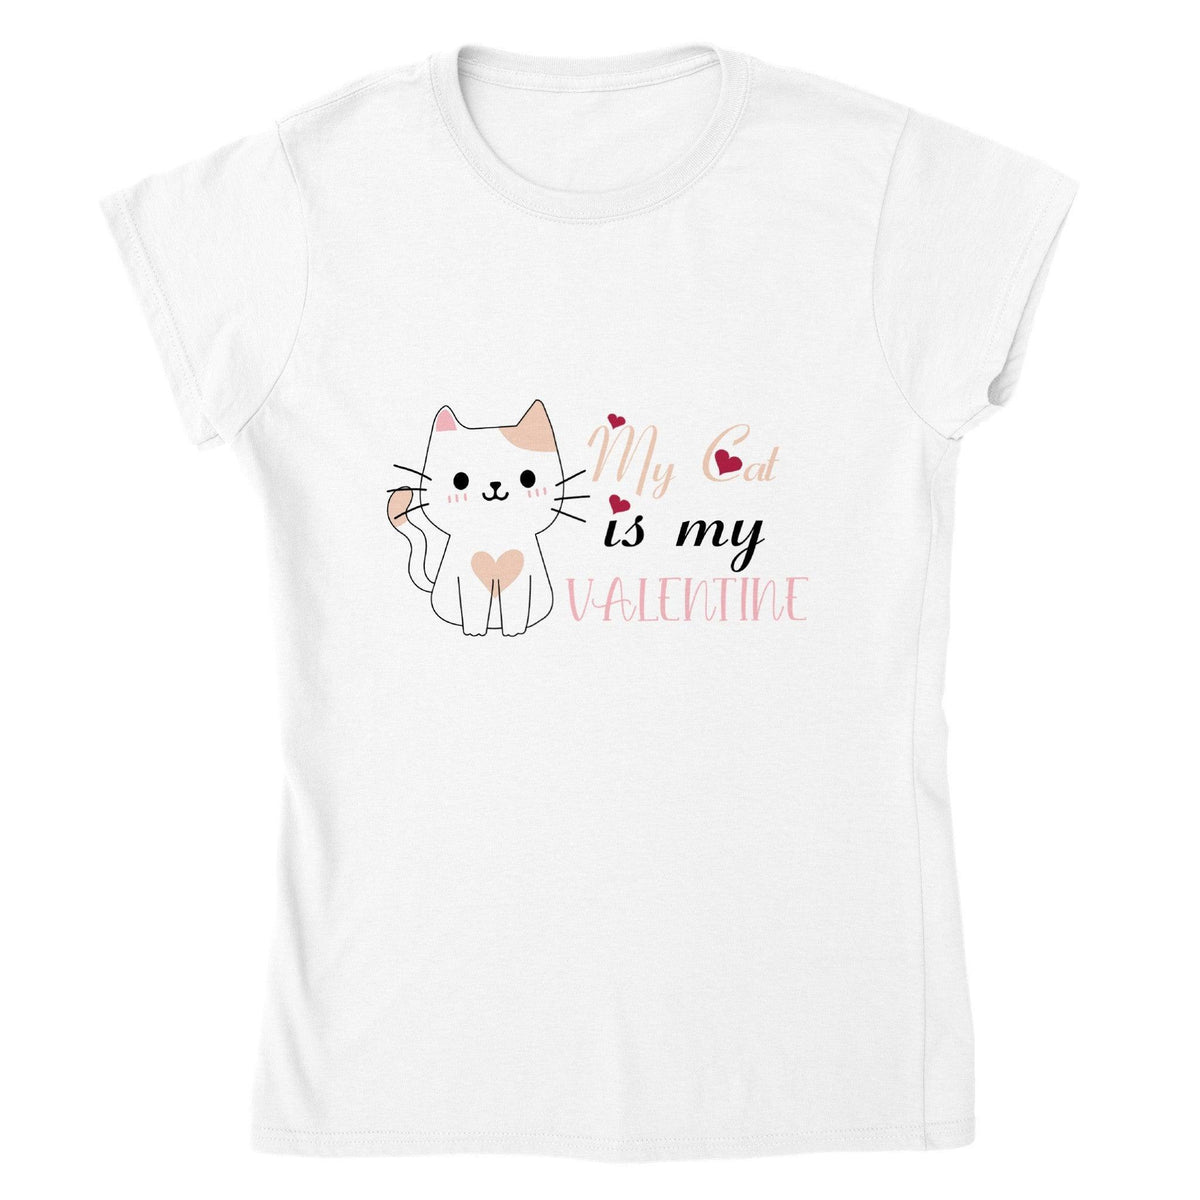 My Cat is MY VALENTINE T-shirt-Regular Fit Tee-StylinArts